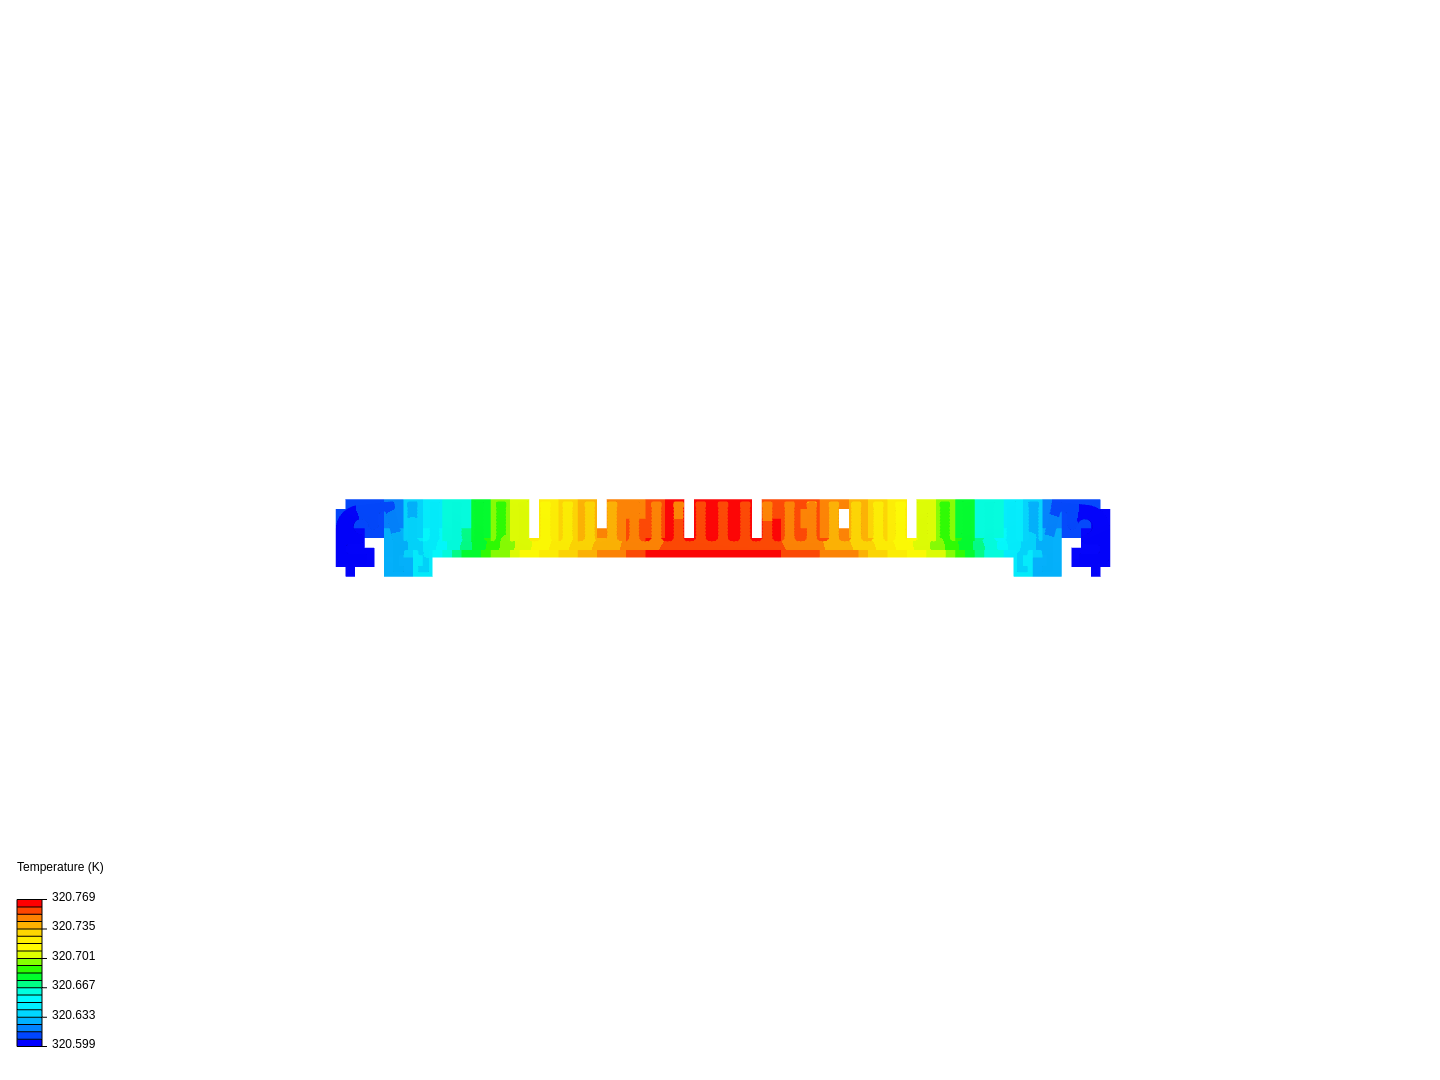 Thermal-Simulation-Heatsink-01 image